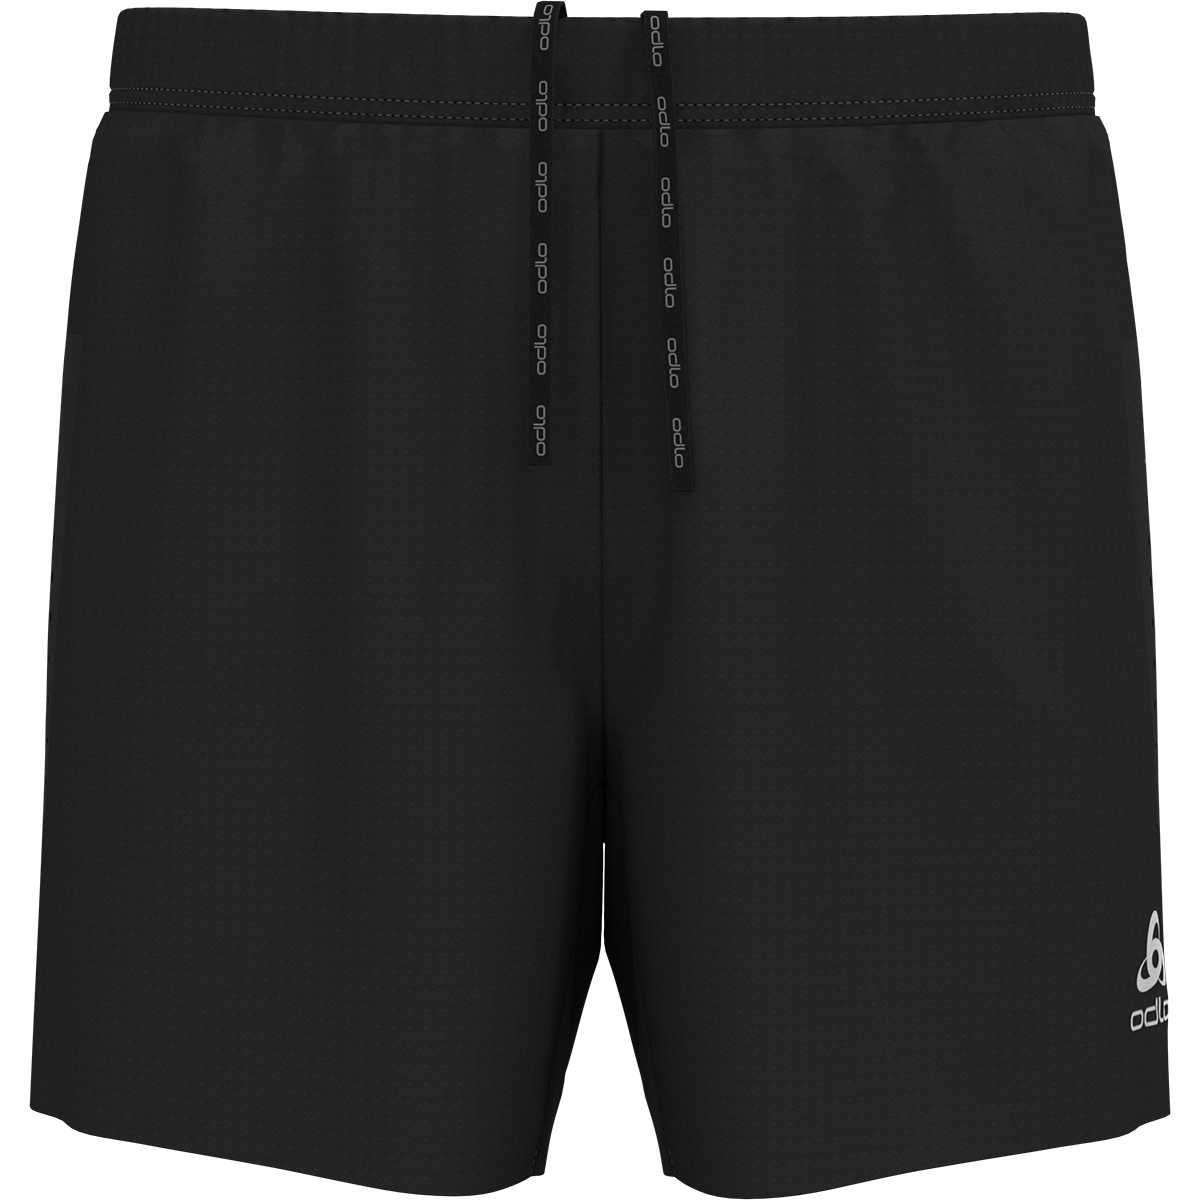 Odlo Herren Zeroweight 5 Inch Shorts von Odlo